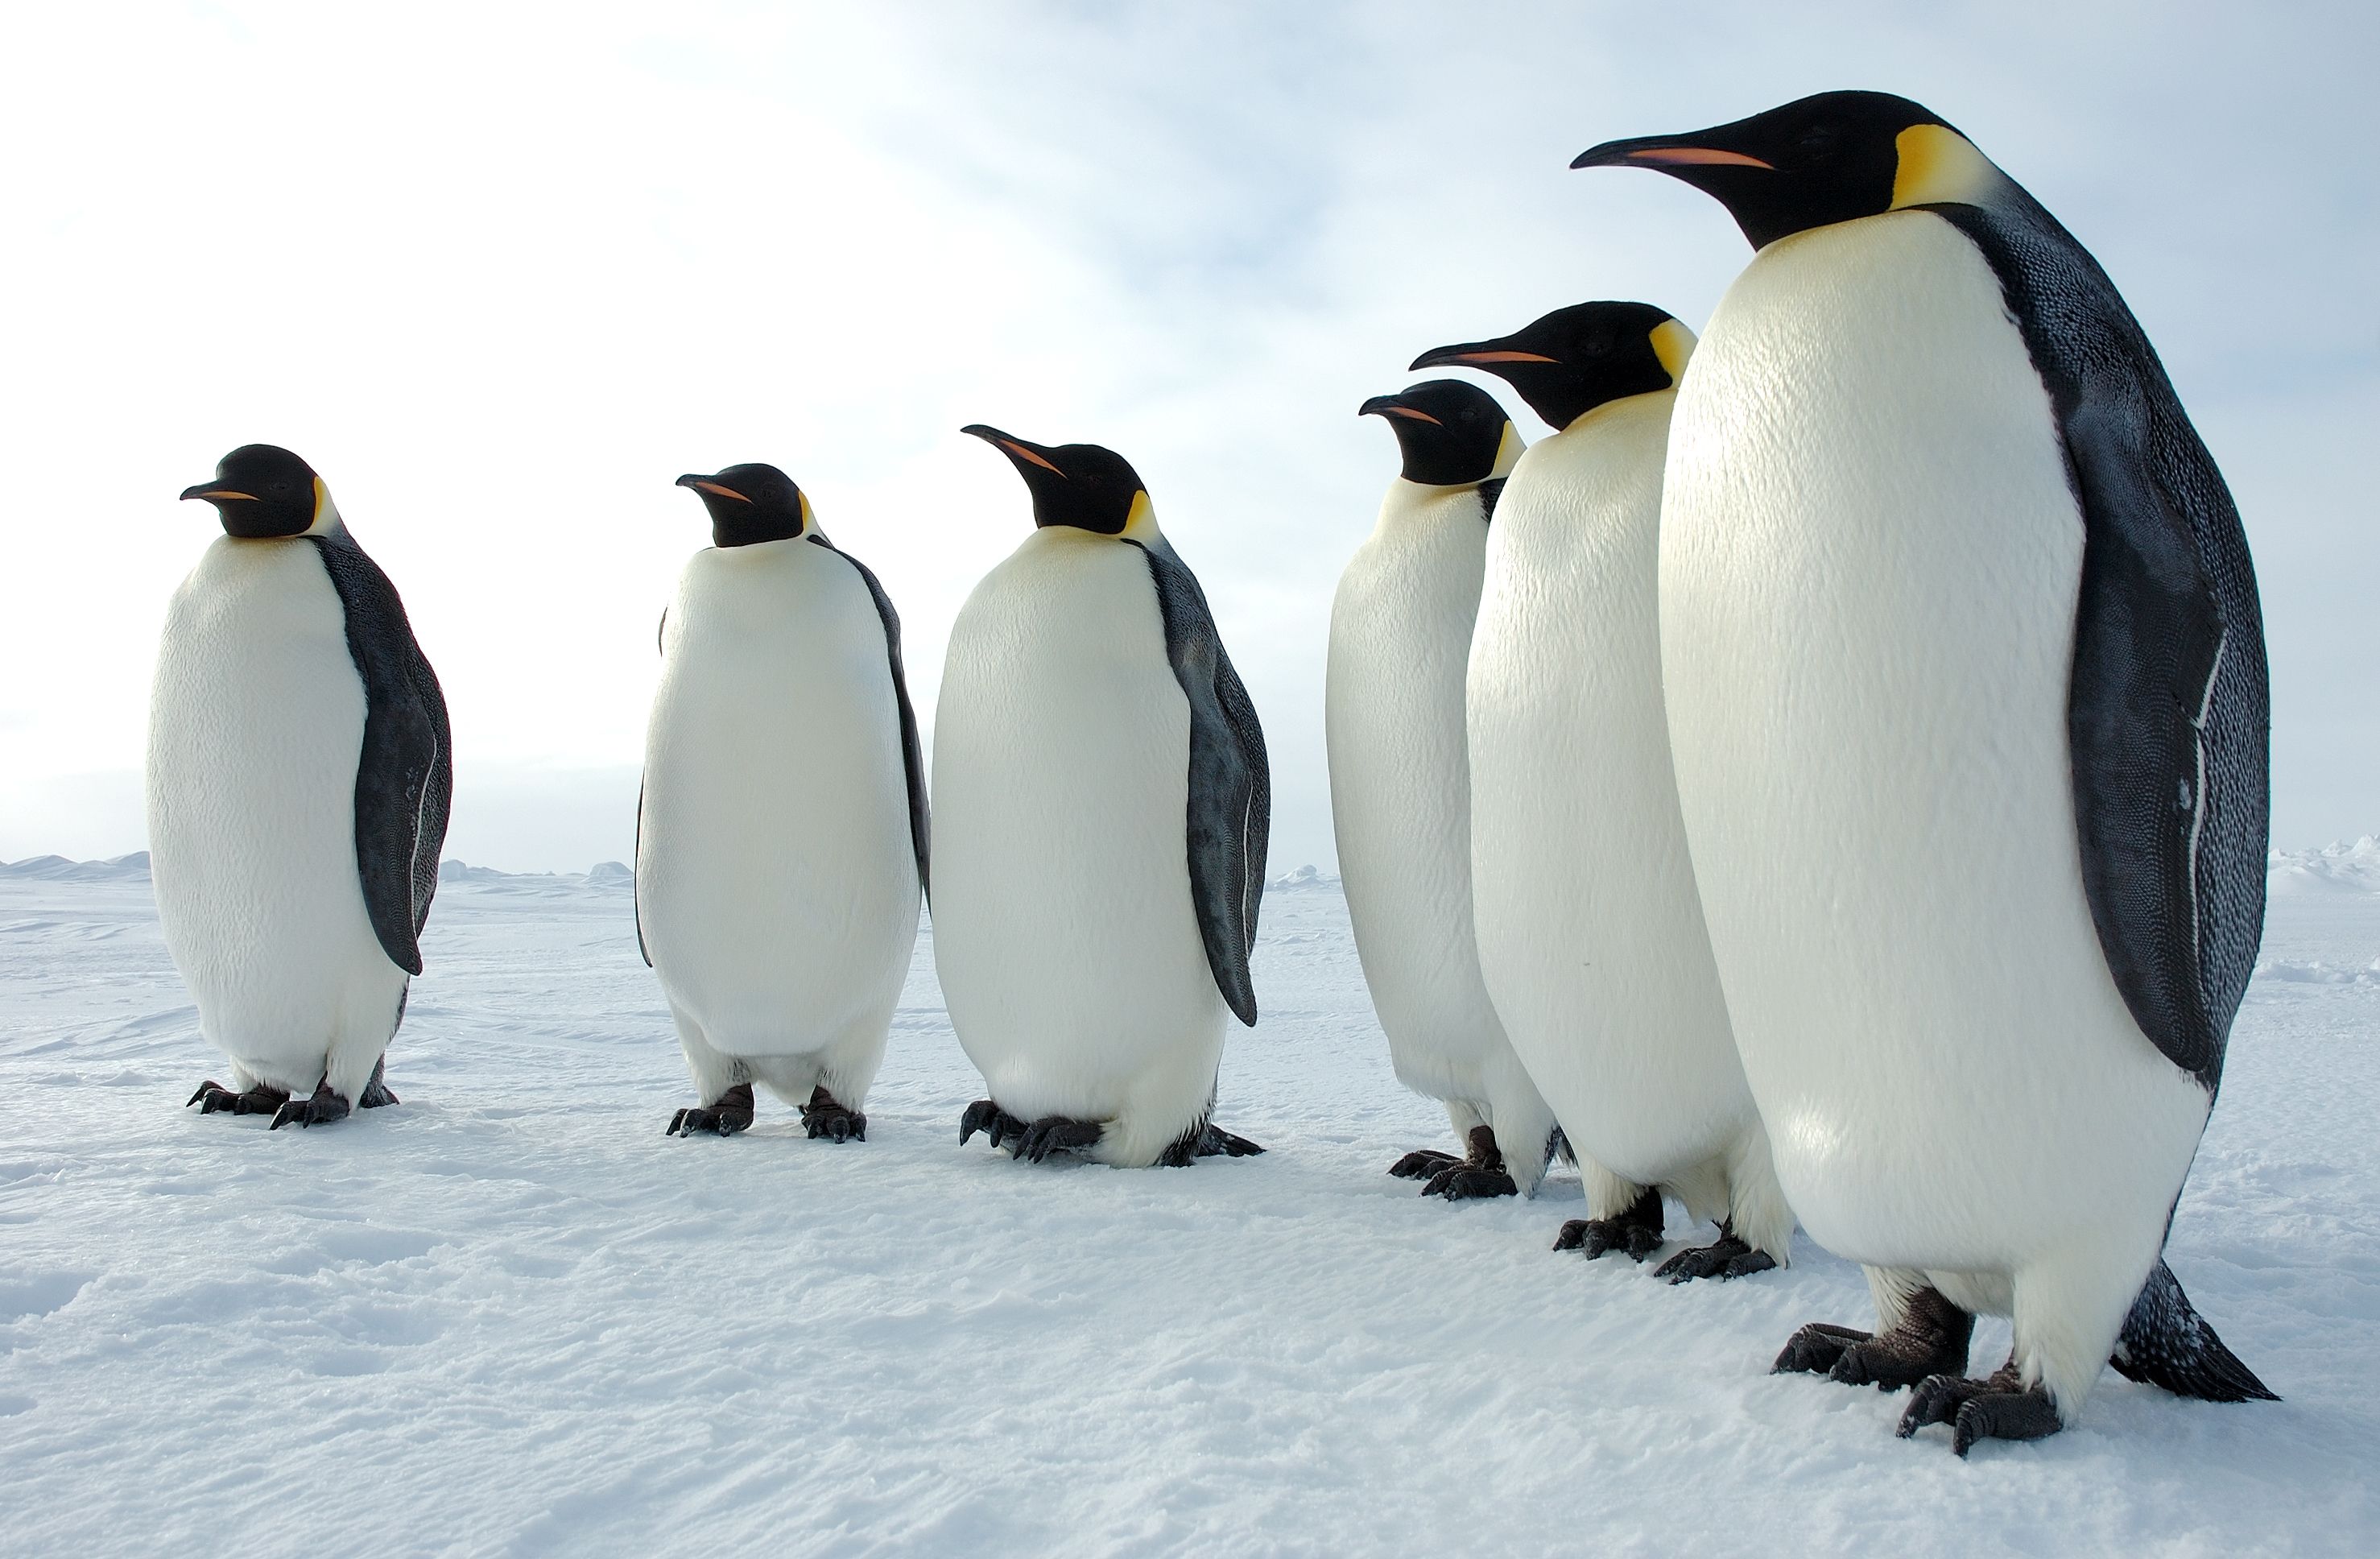 image of penguins. Emperor penguins. Photo courtesy Glen Grant